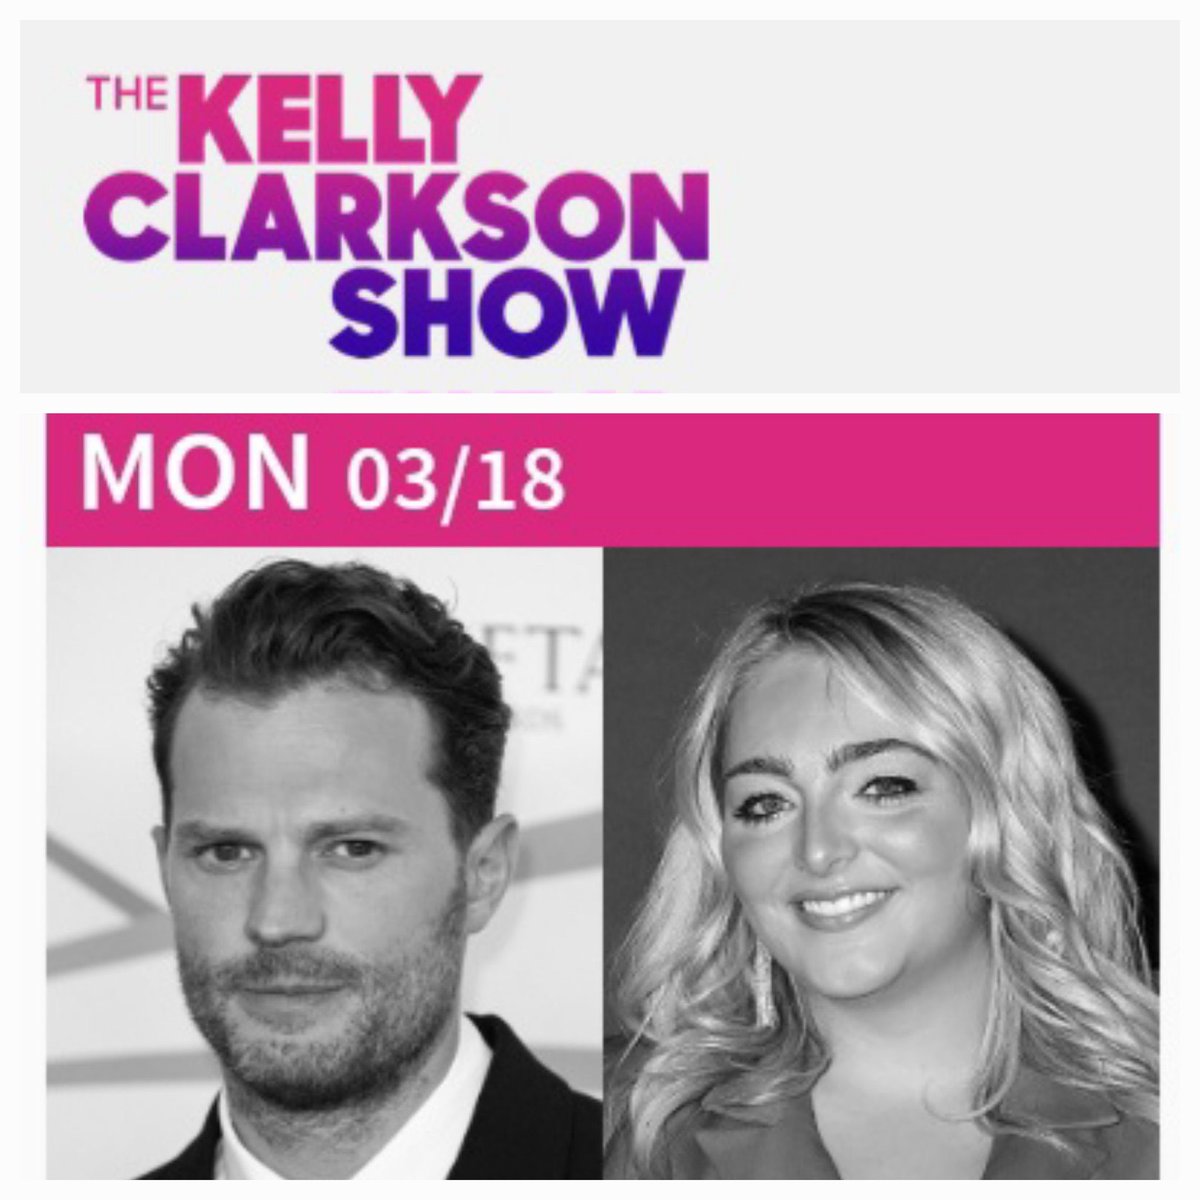 Monday, March 18th. #KellyClarkson #JamieDornan #TheTourist